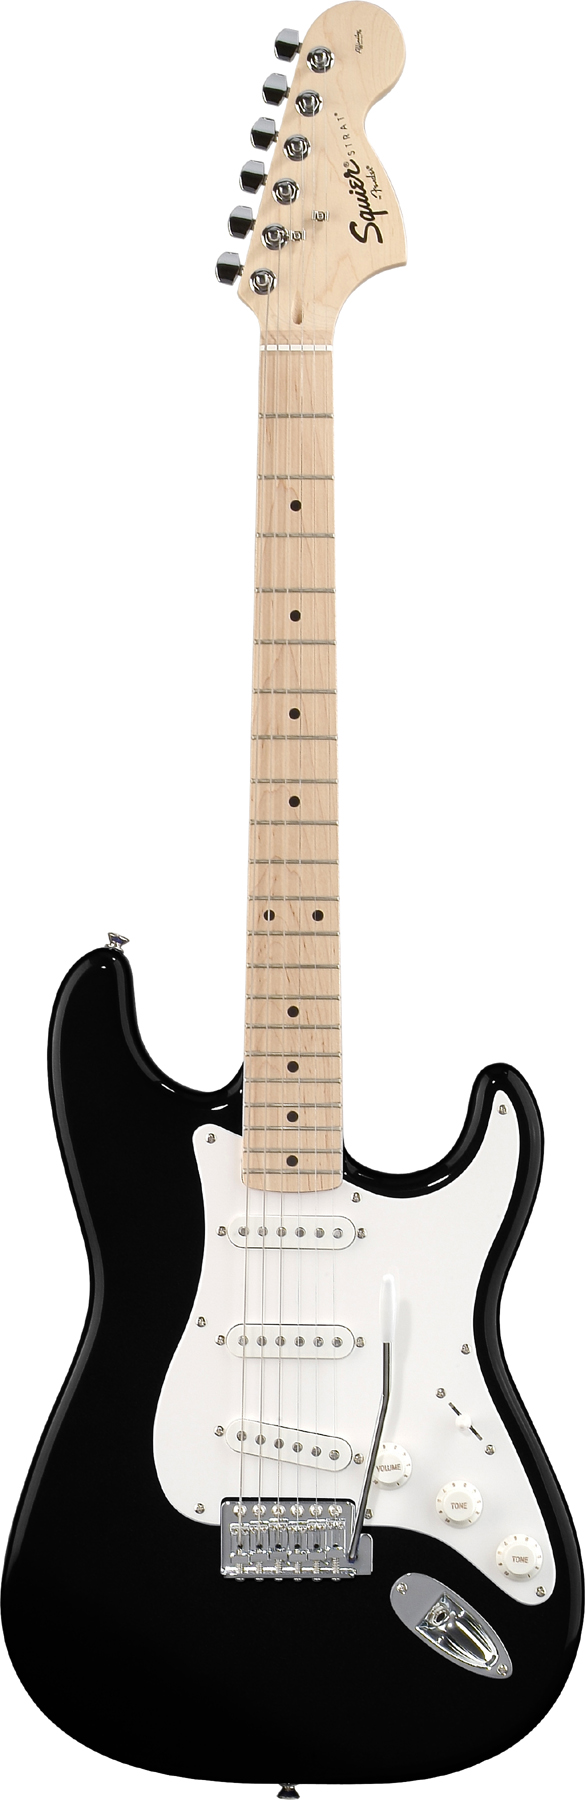 Affinity Stratocaster